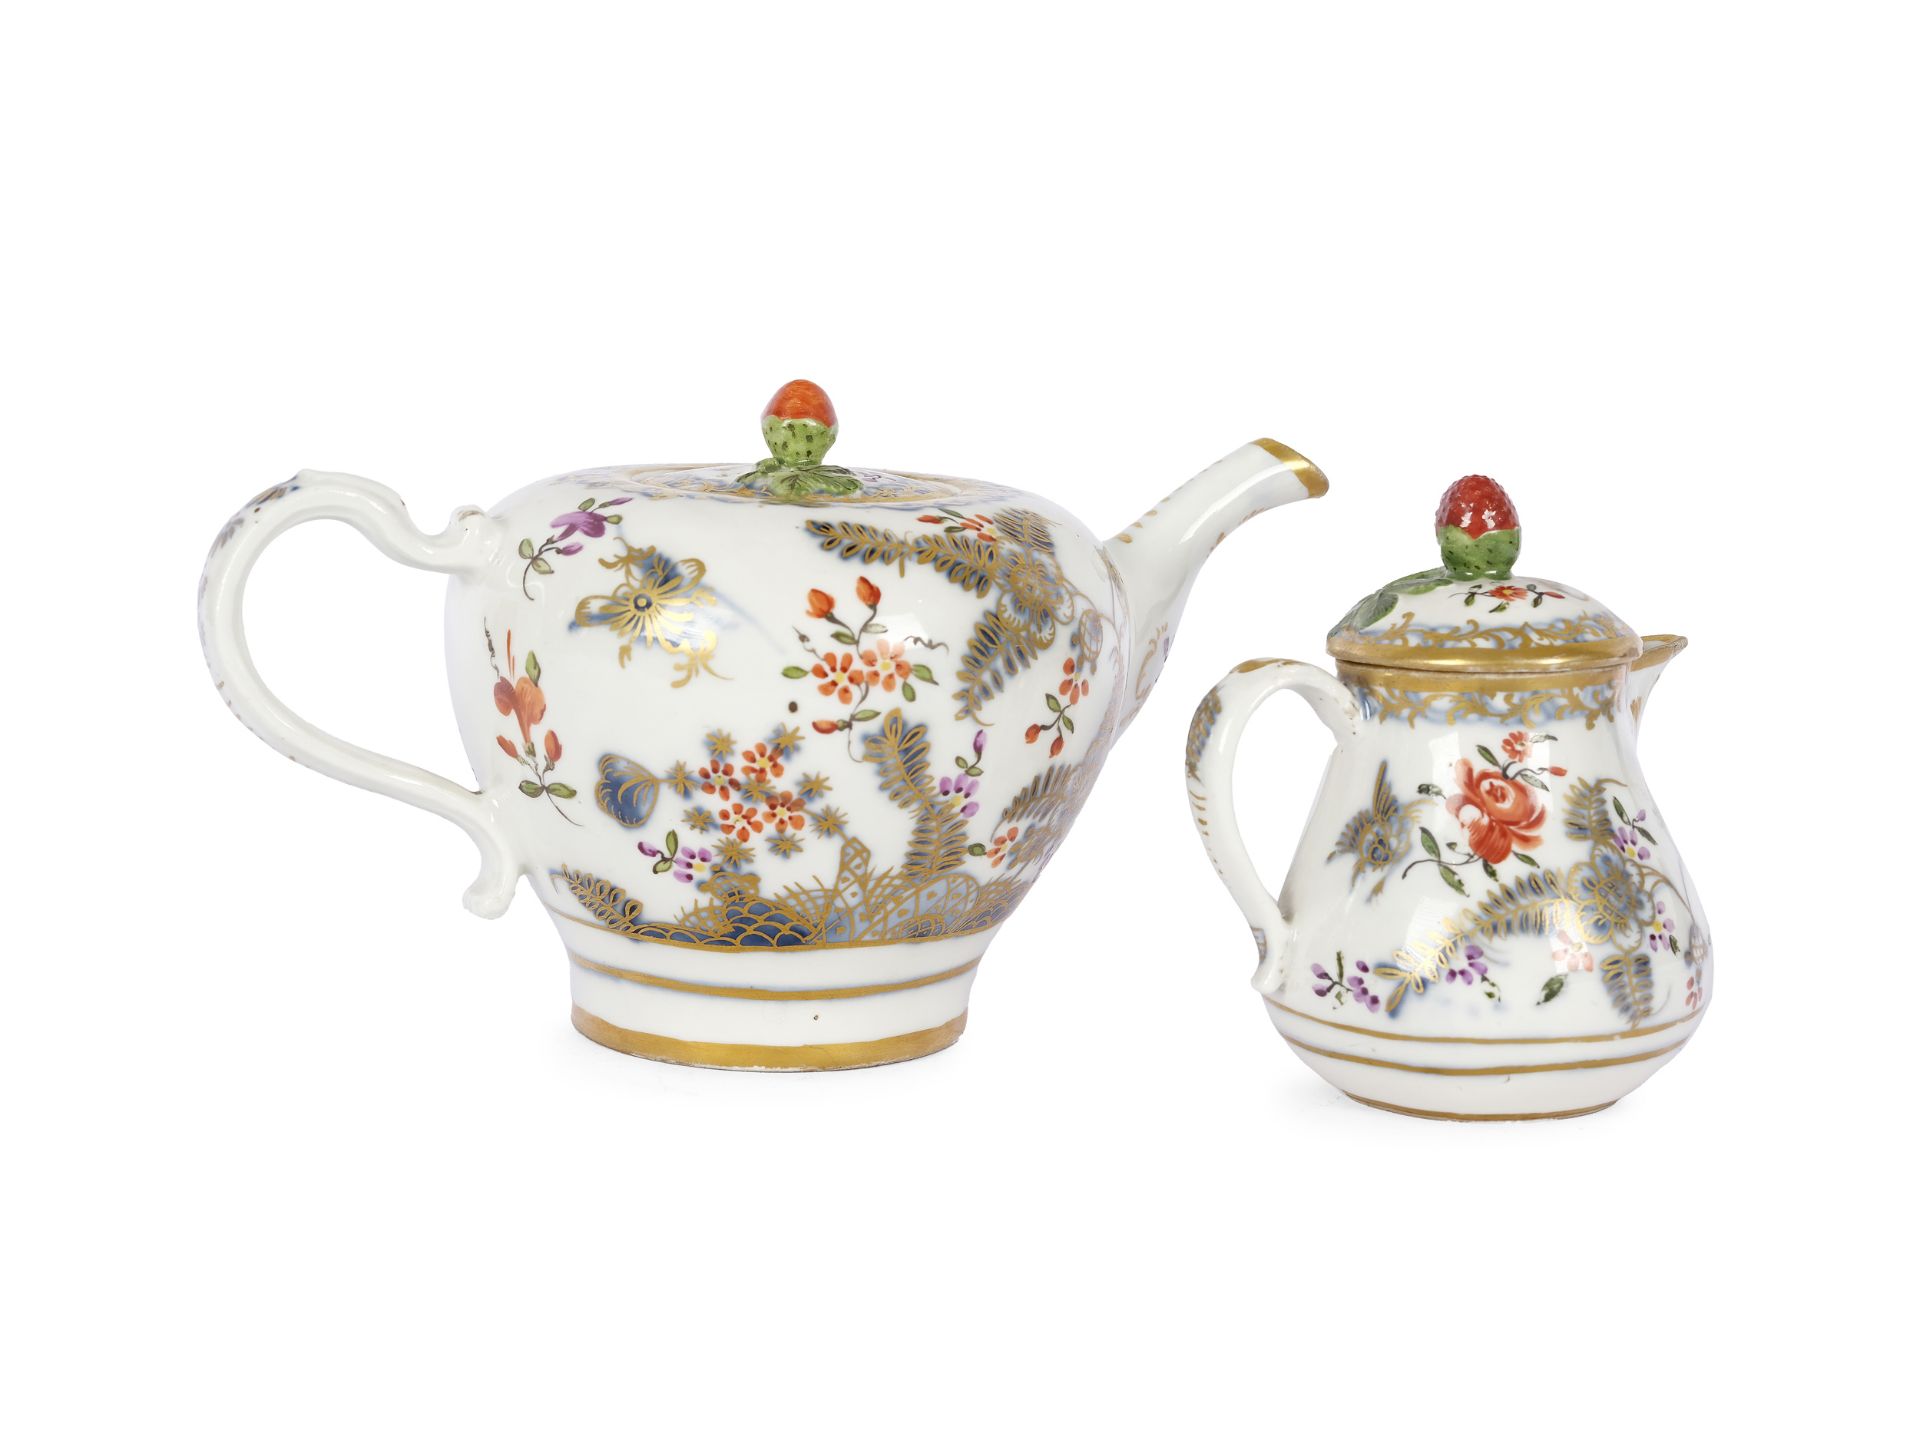 Teapot & milk jug, Old Vienna, 18th century - Image 2 of 3